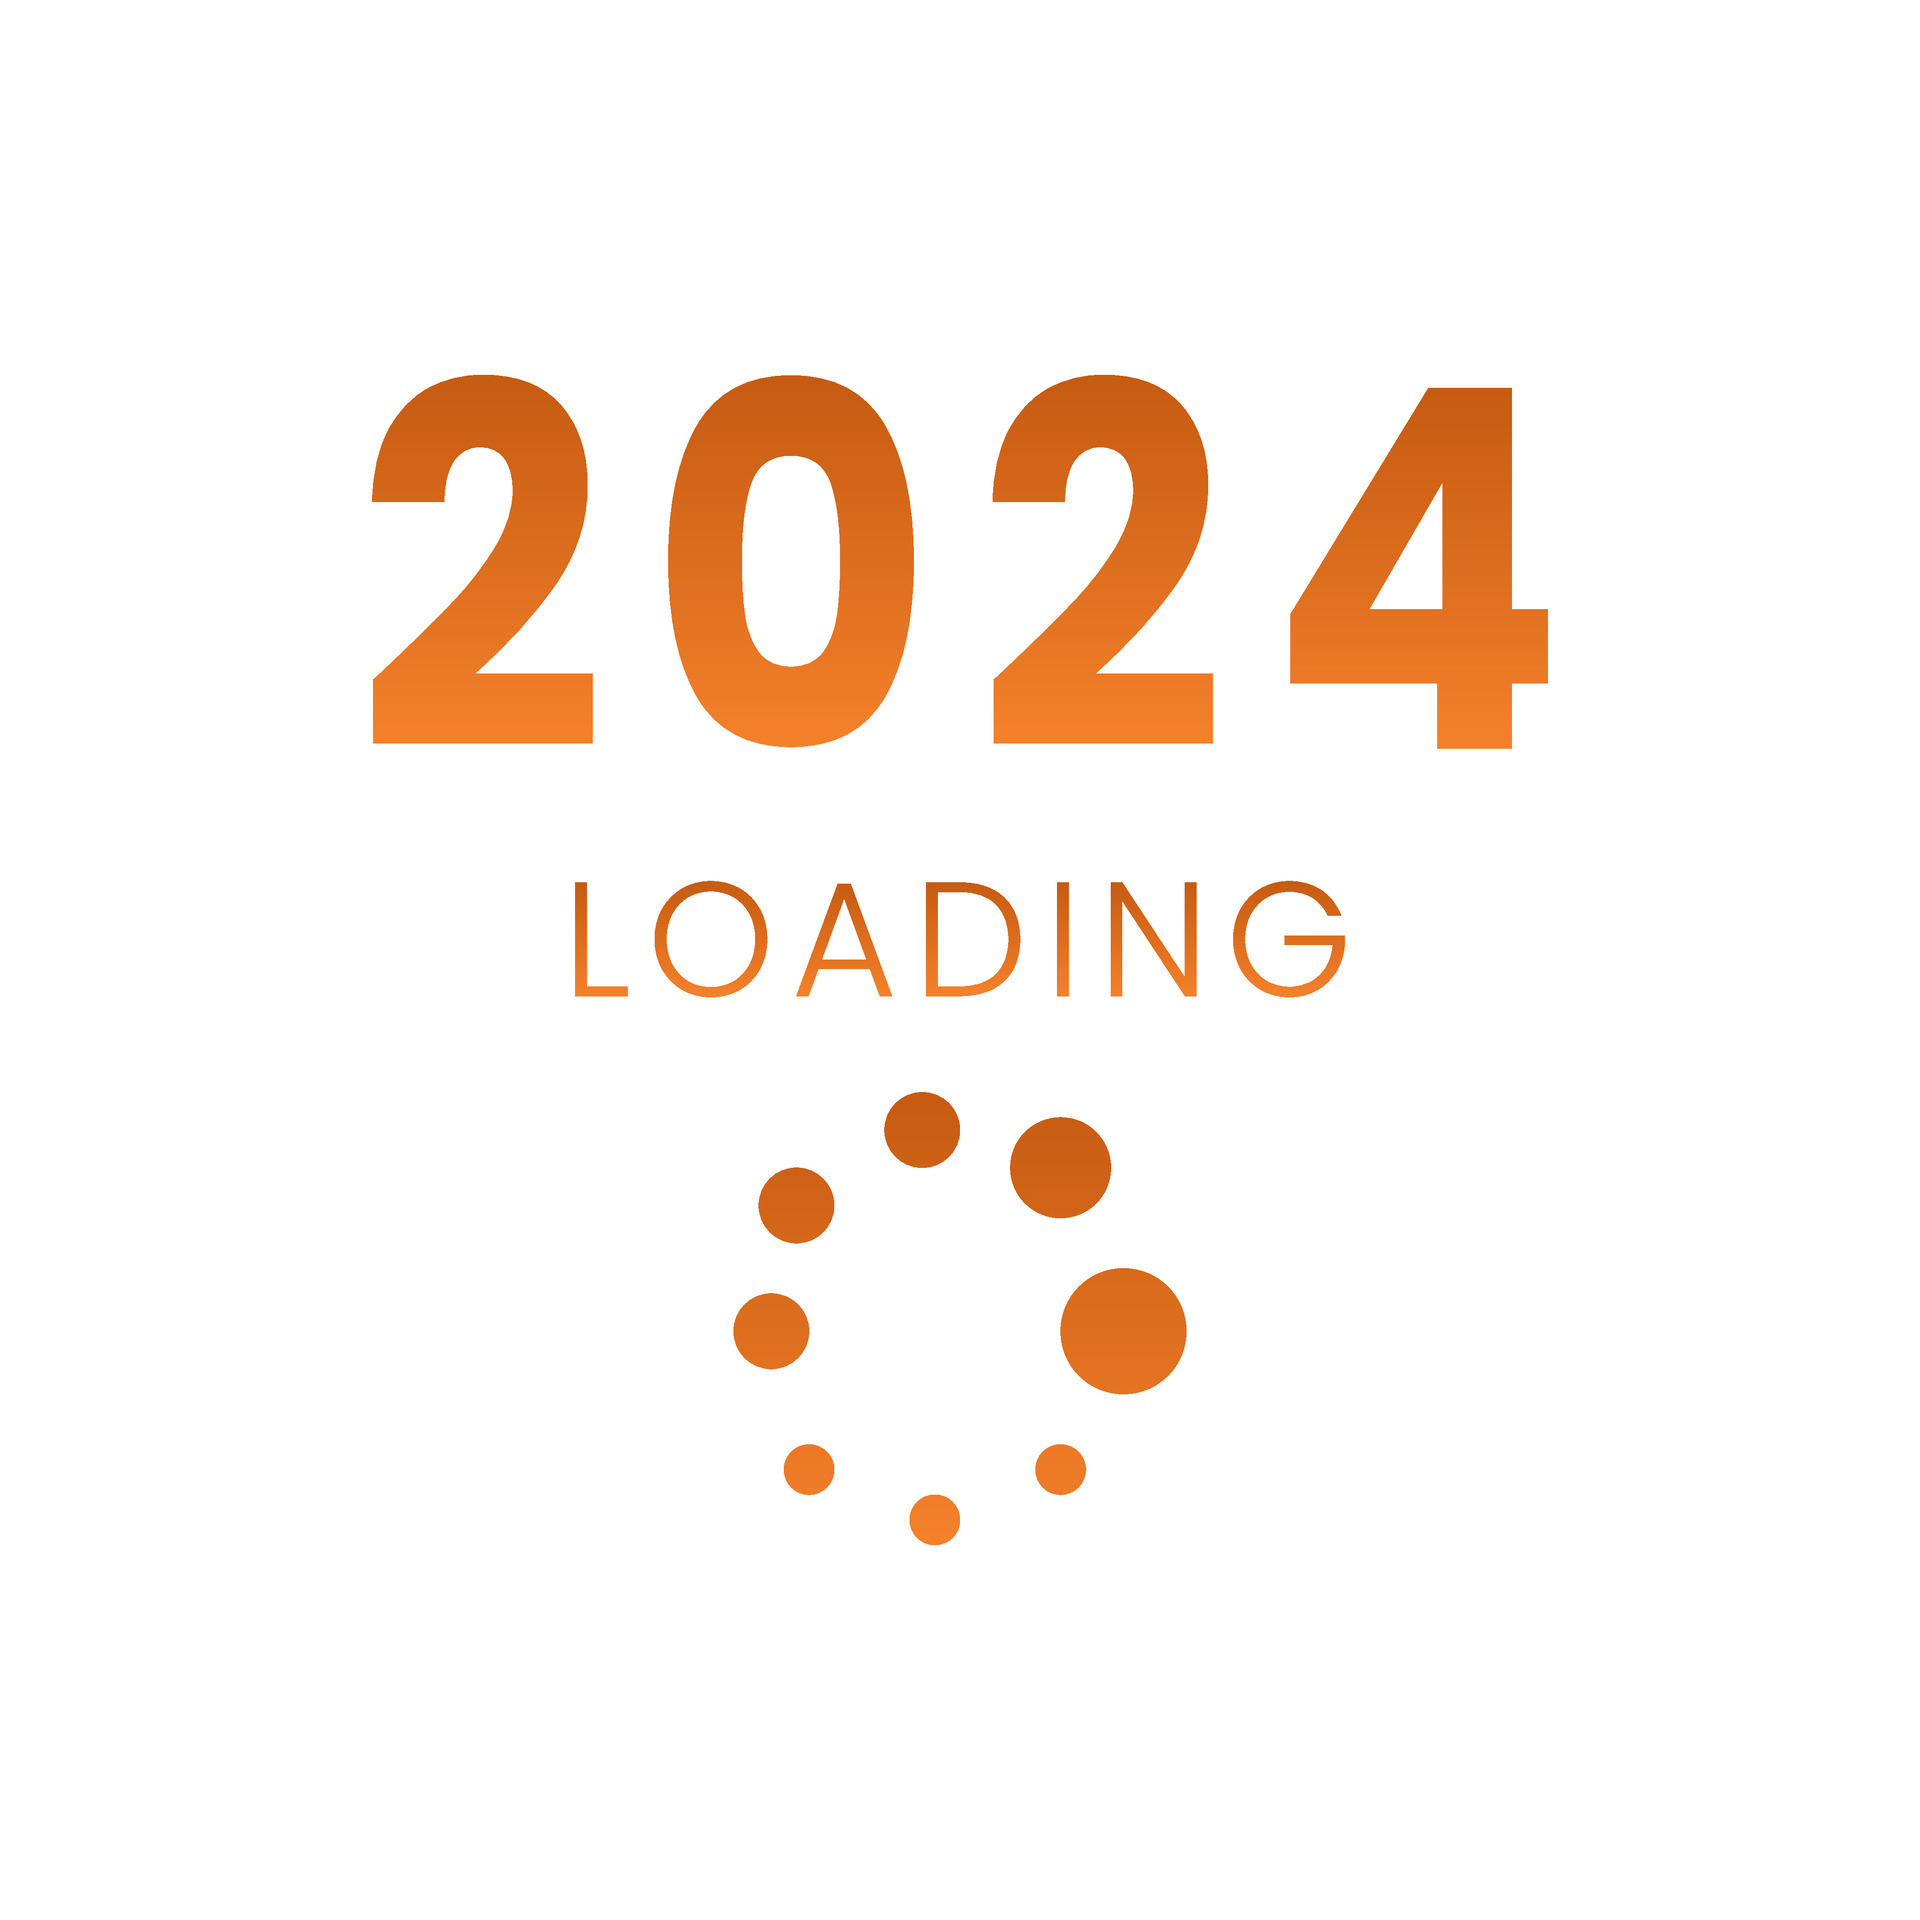 loading bar for 2024 goal planning business concept 2024